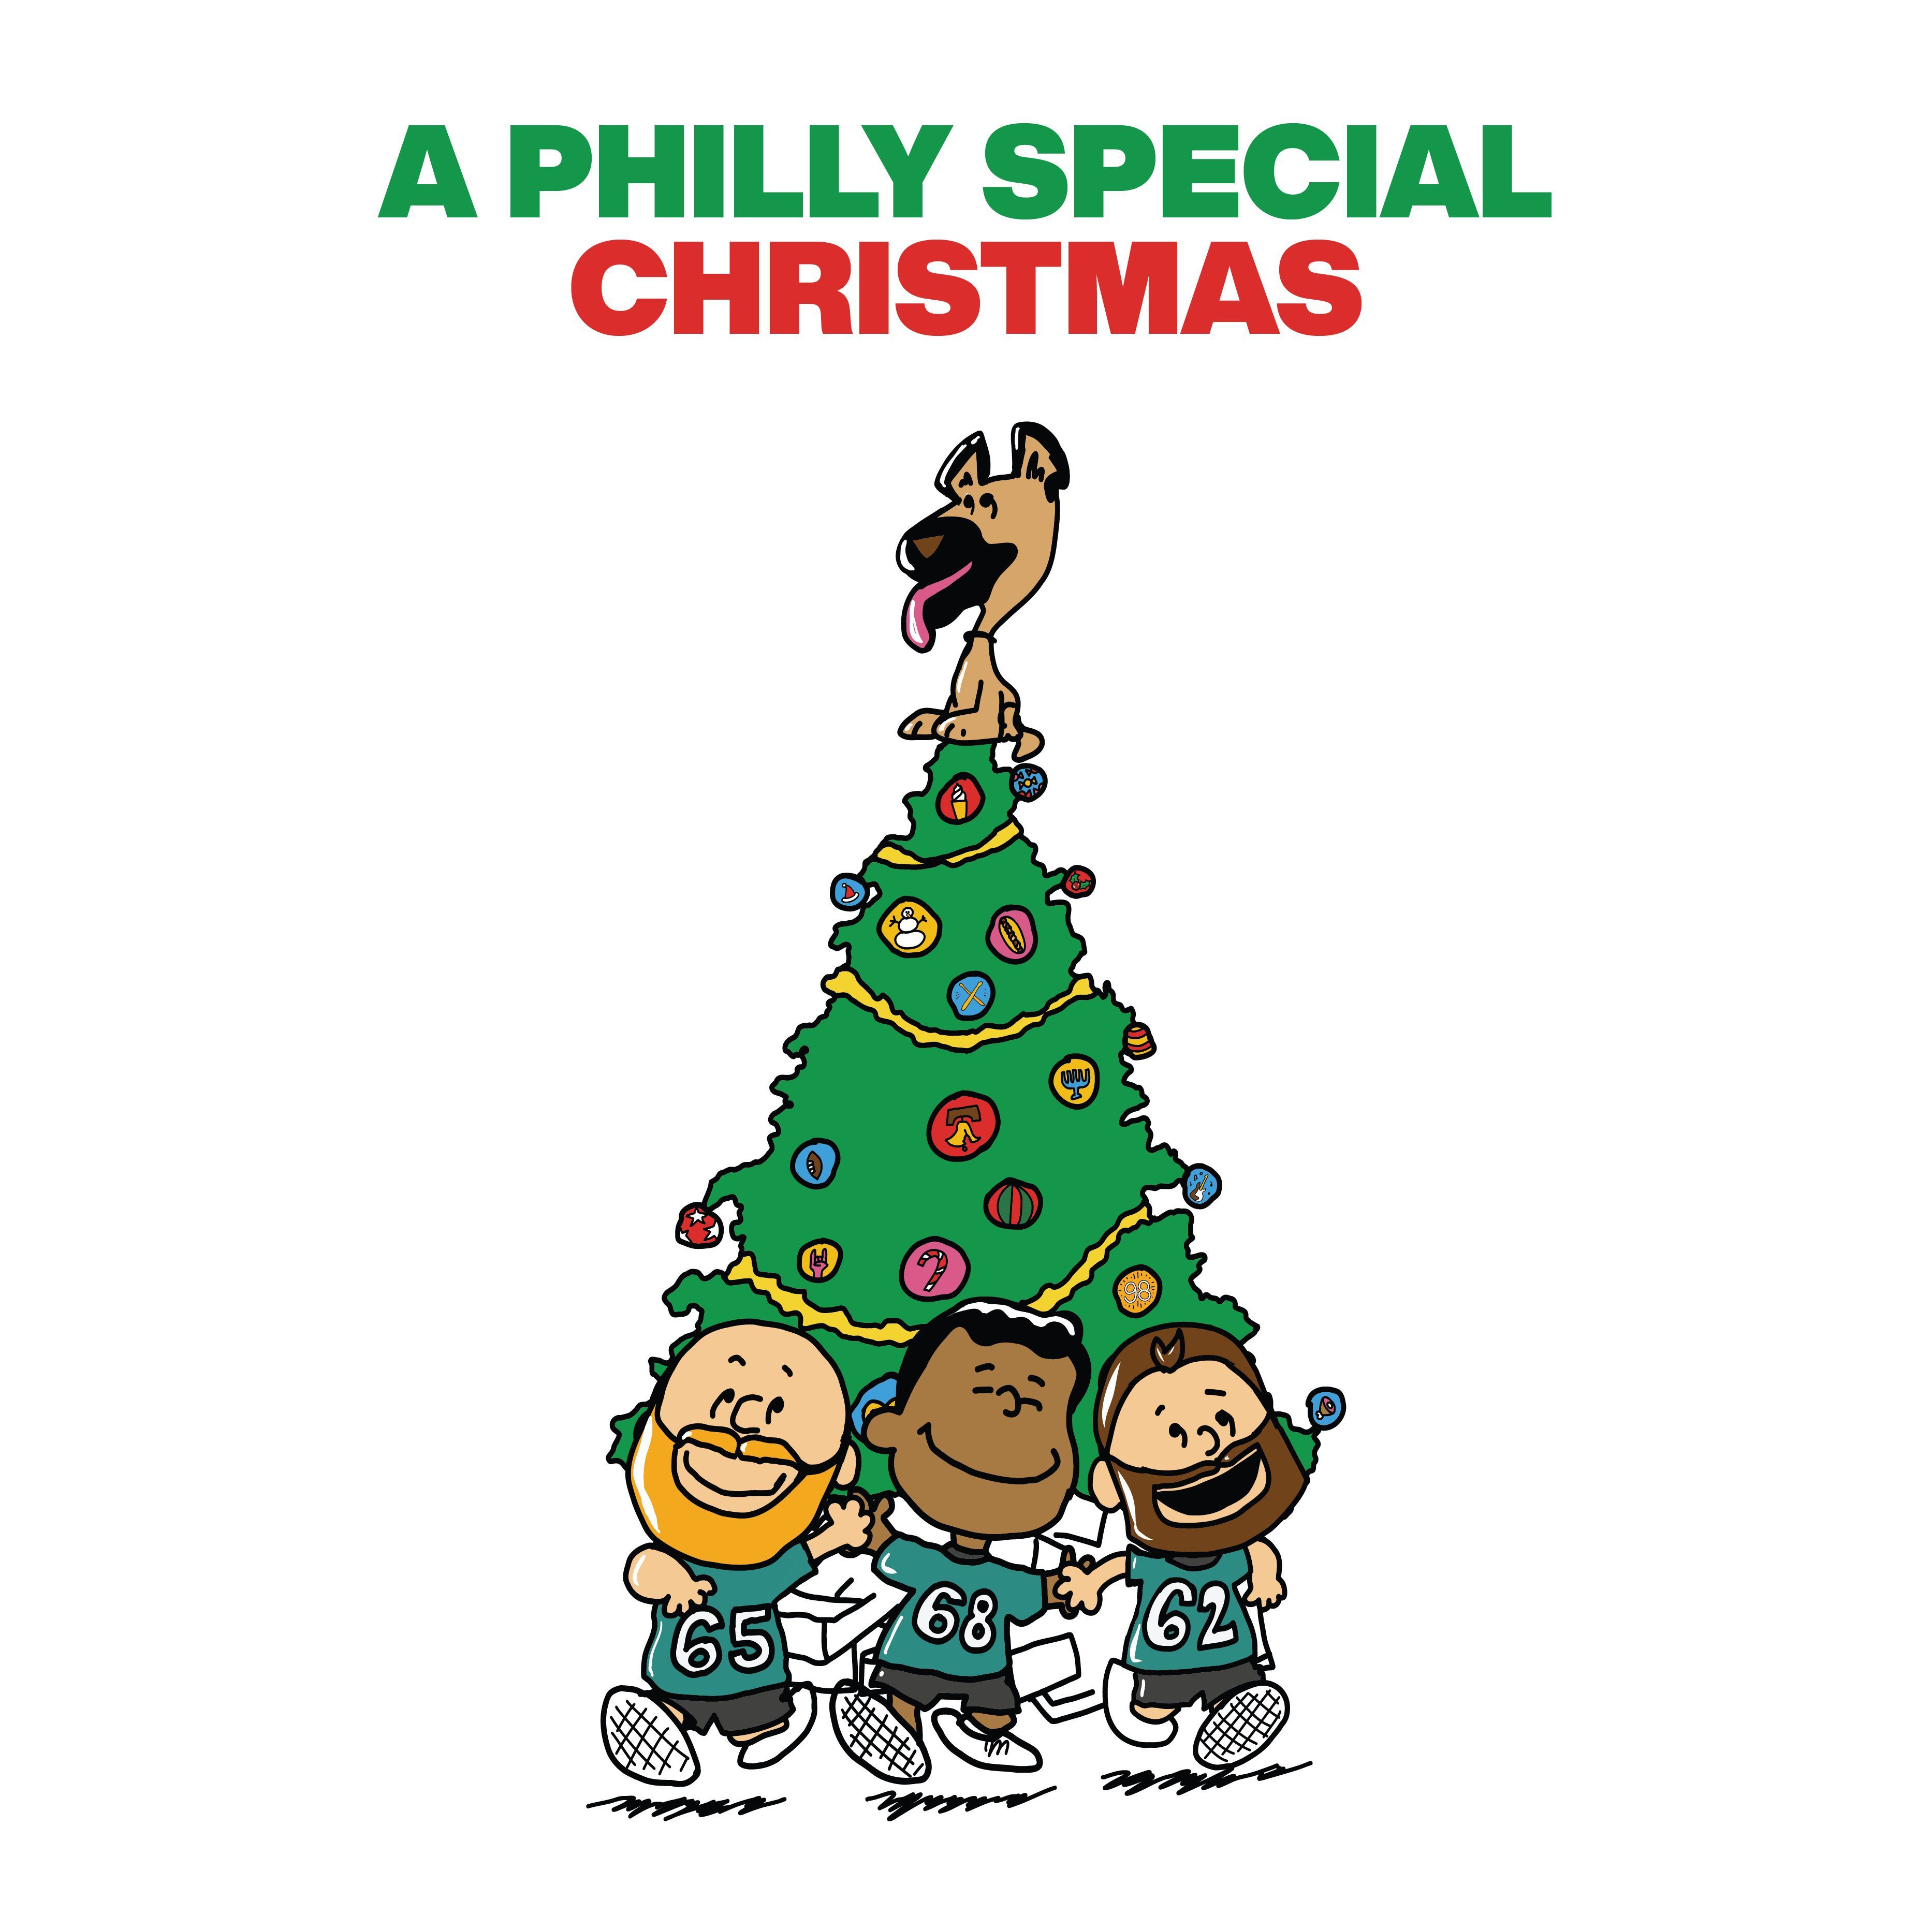 Philadelphia Eagles Christmas album stars Jason Kelce and others - Deseret  News